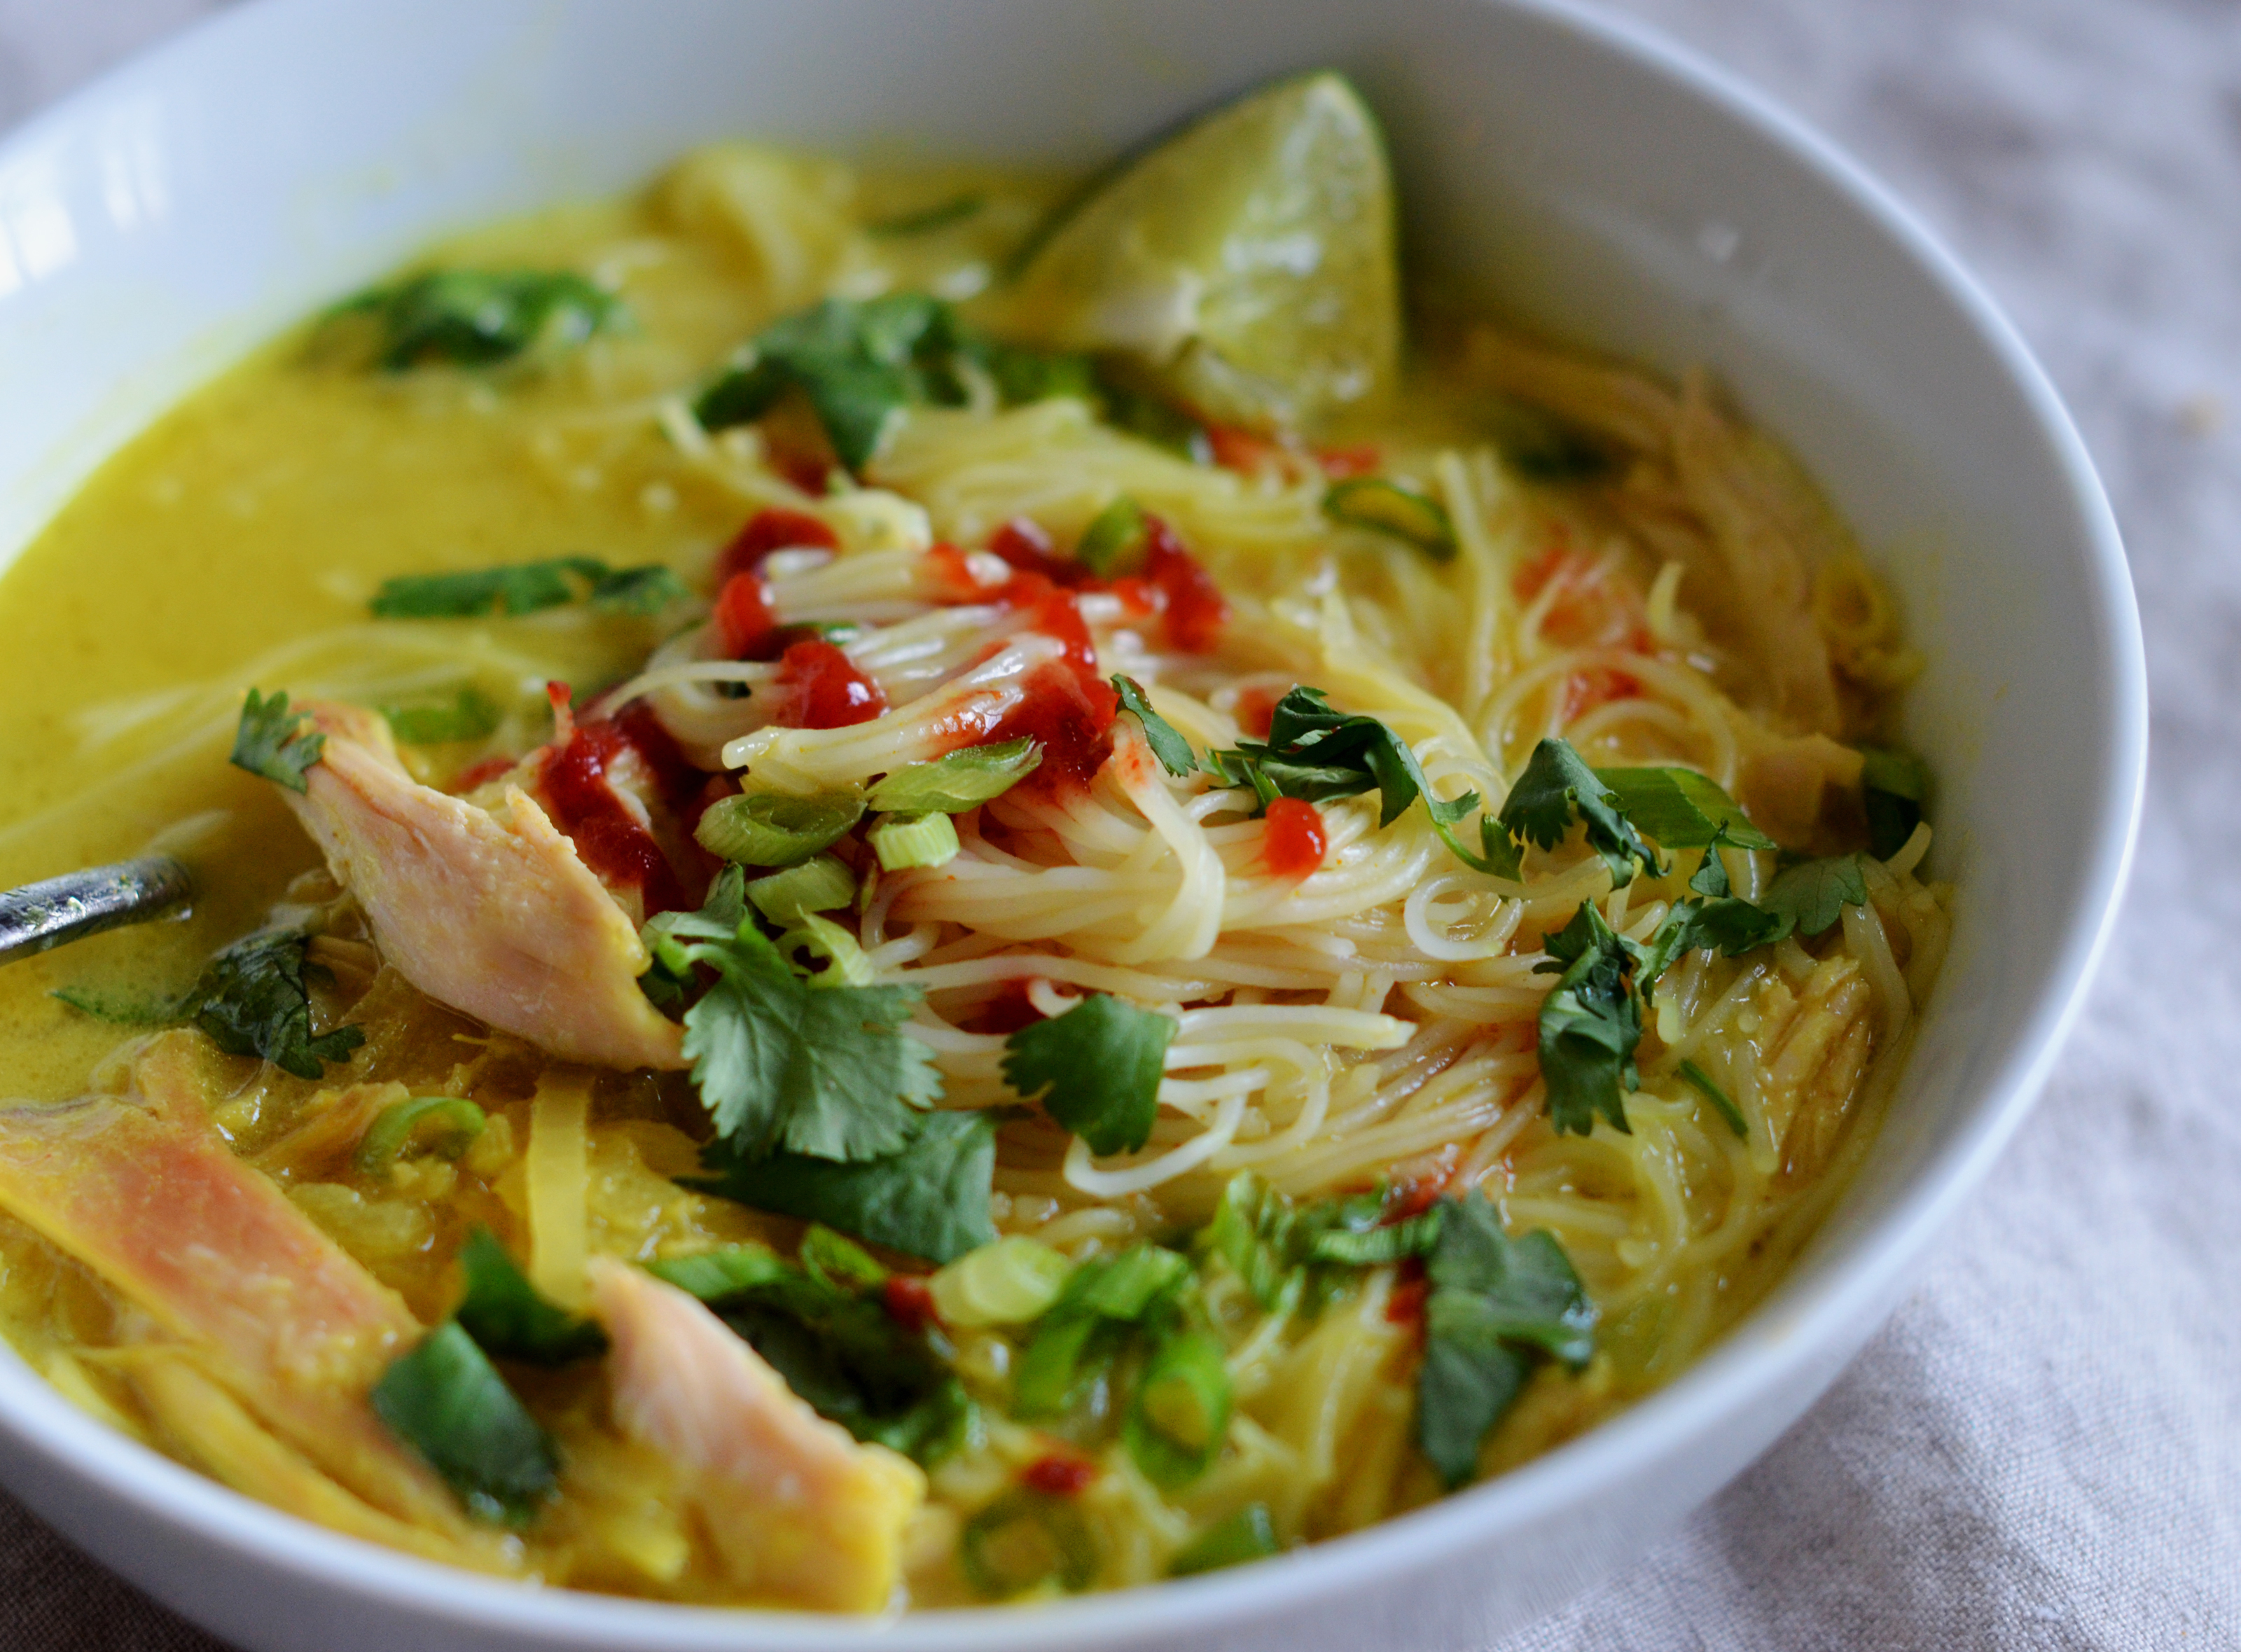 https://www.onceuponachef.com/images/2017/01/Thai-Chicken-Noodle-Soup-1.jpg